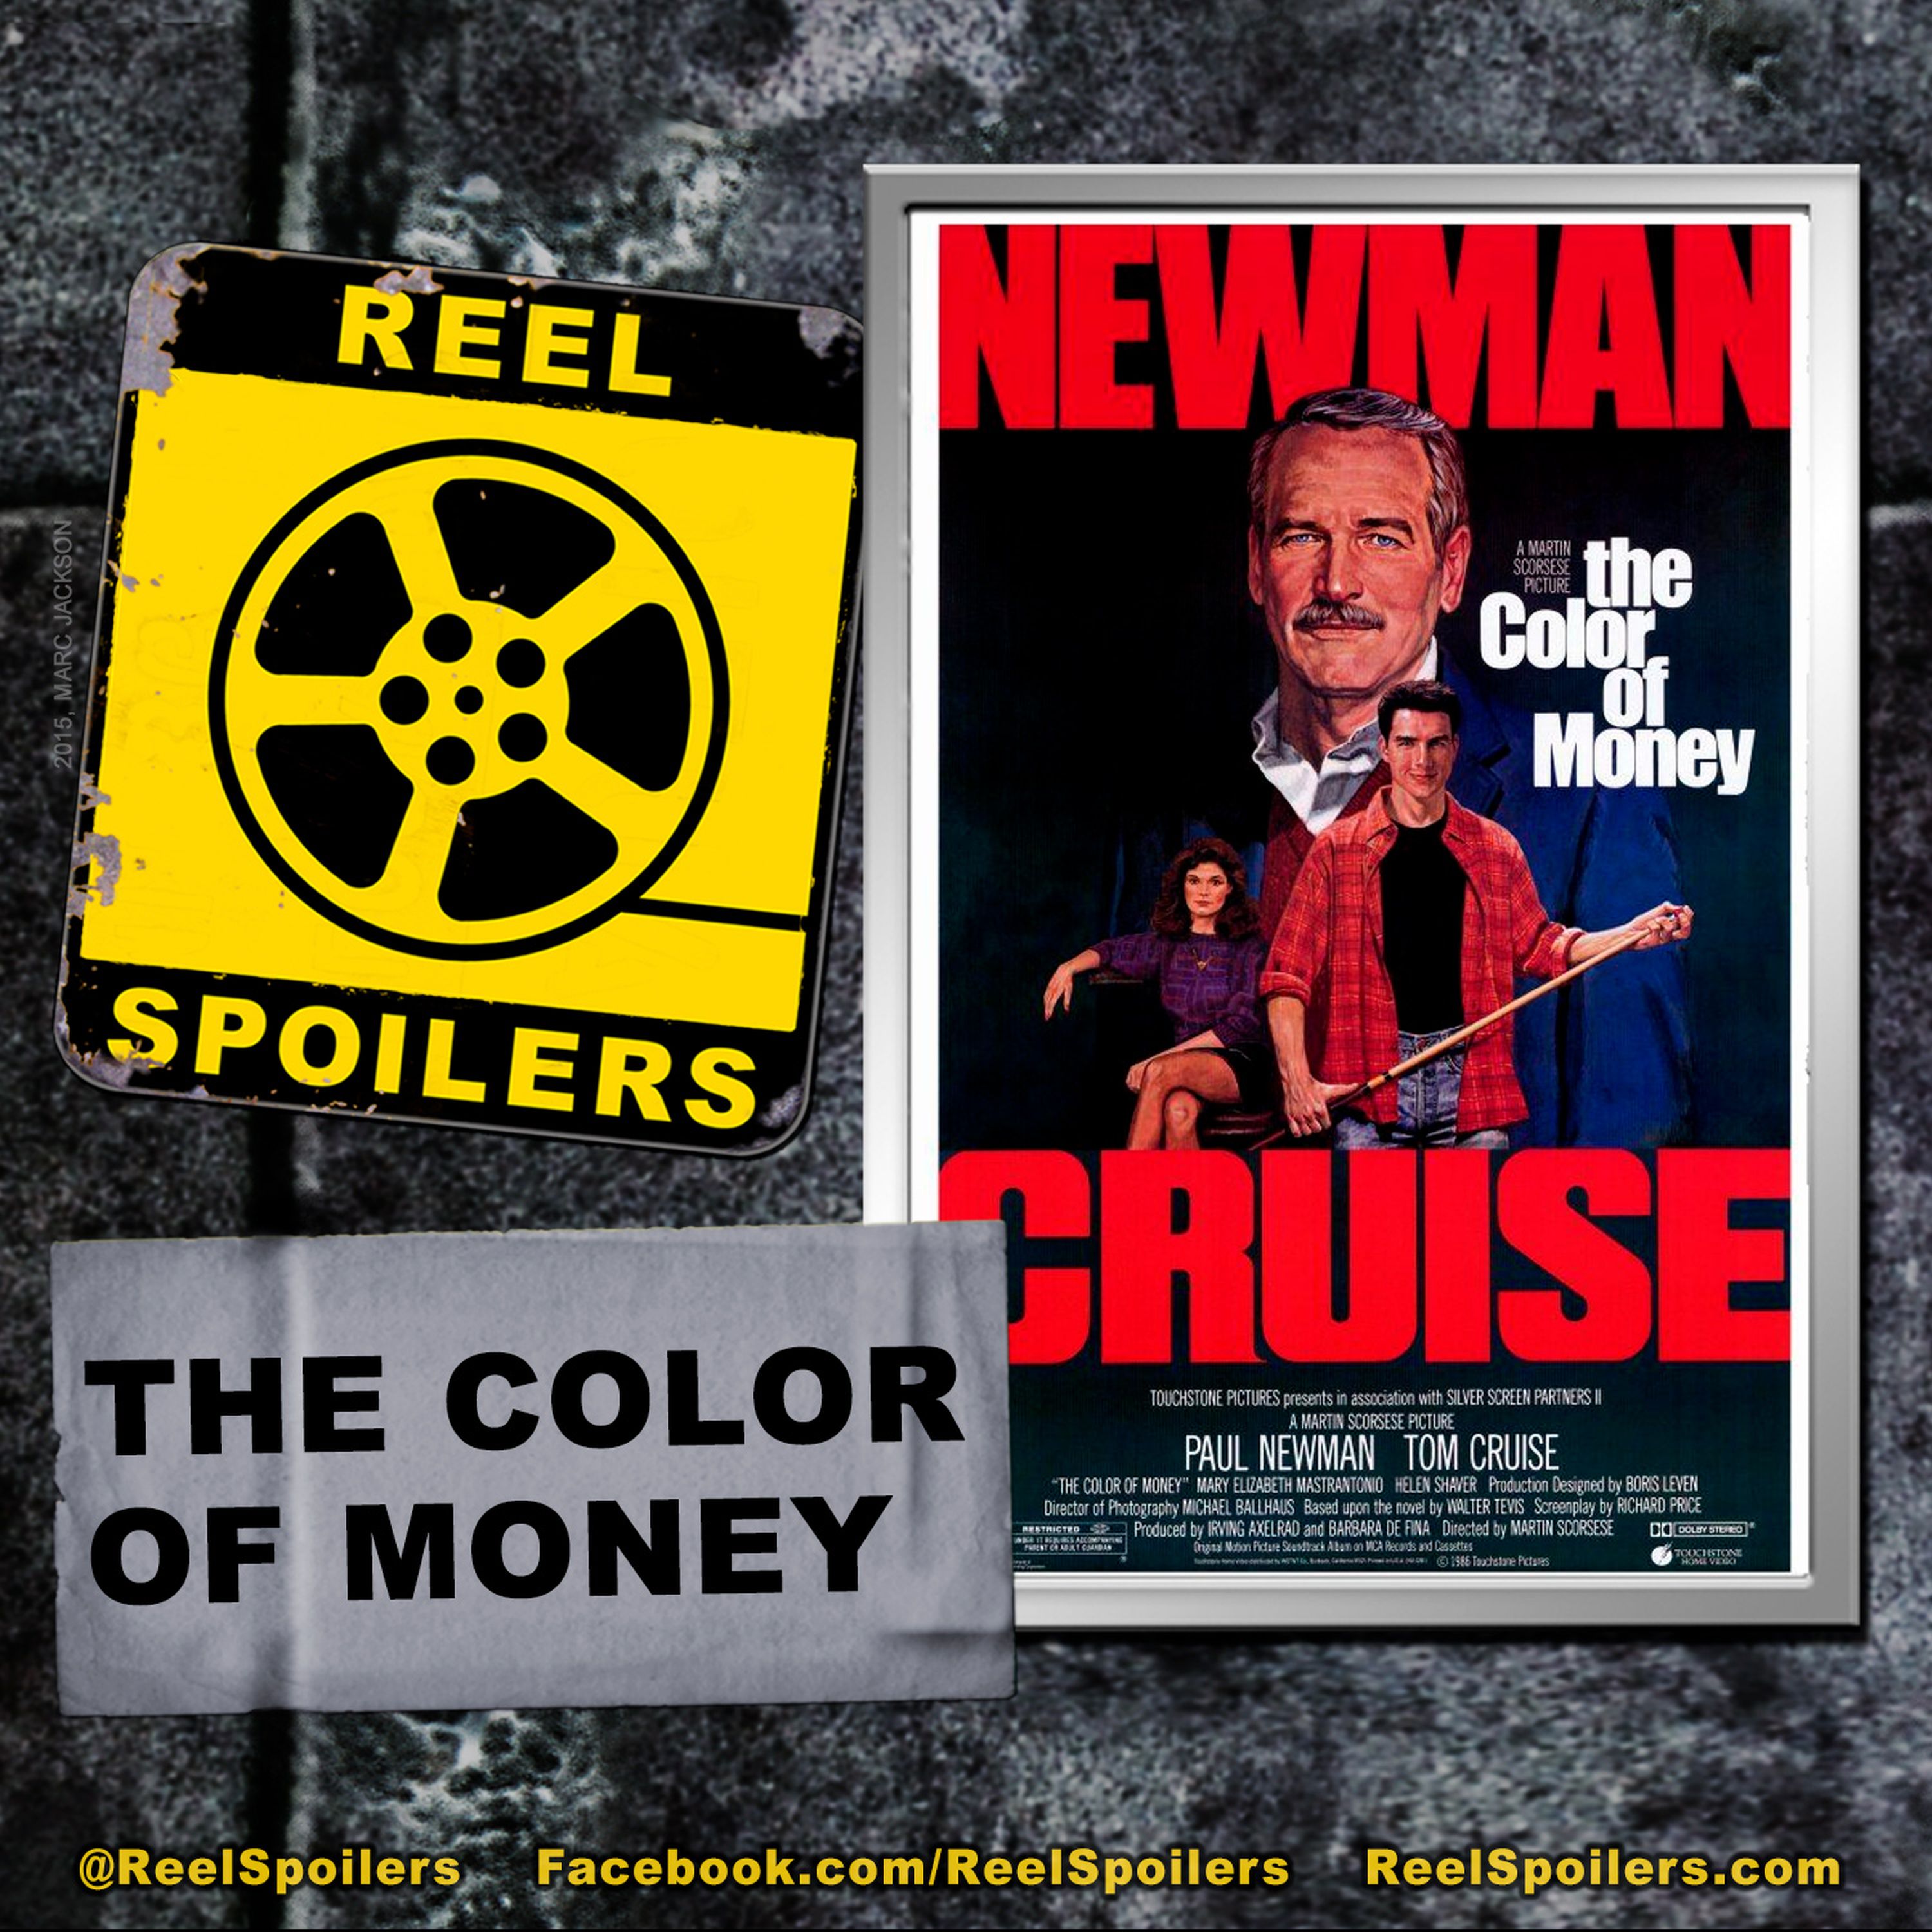 THE COLOR OF MONEY Starring Paul Newman, Tom Cruise, Mary Elizabeth Mastrantonio Image